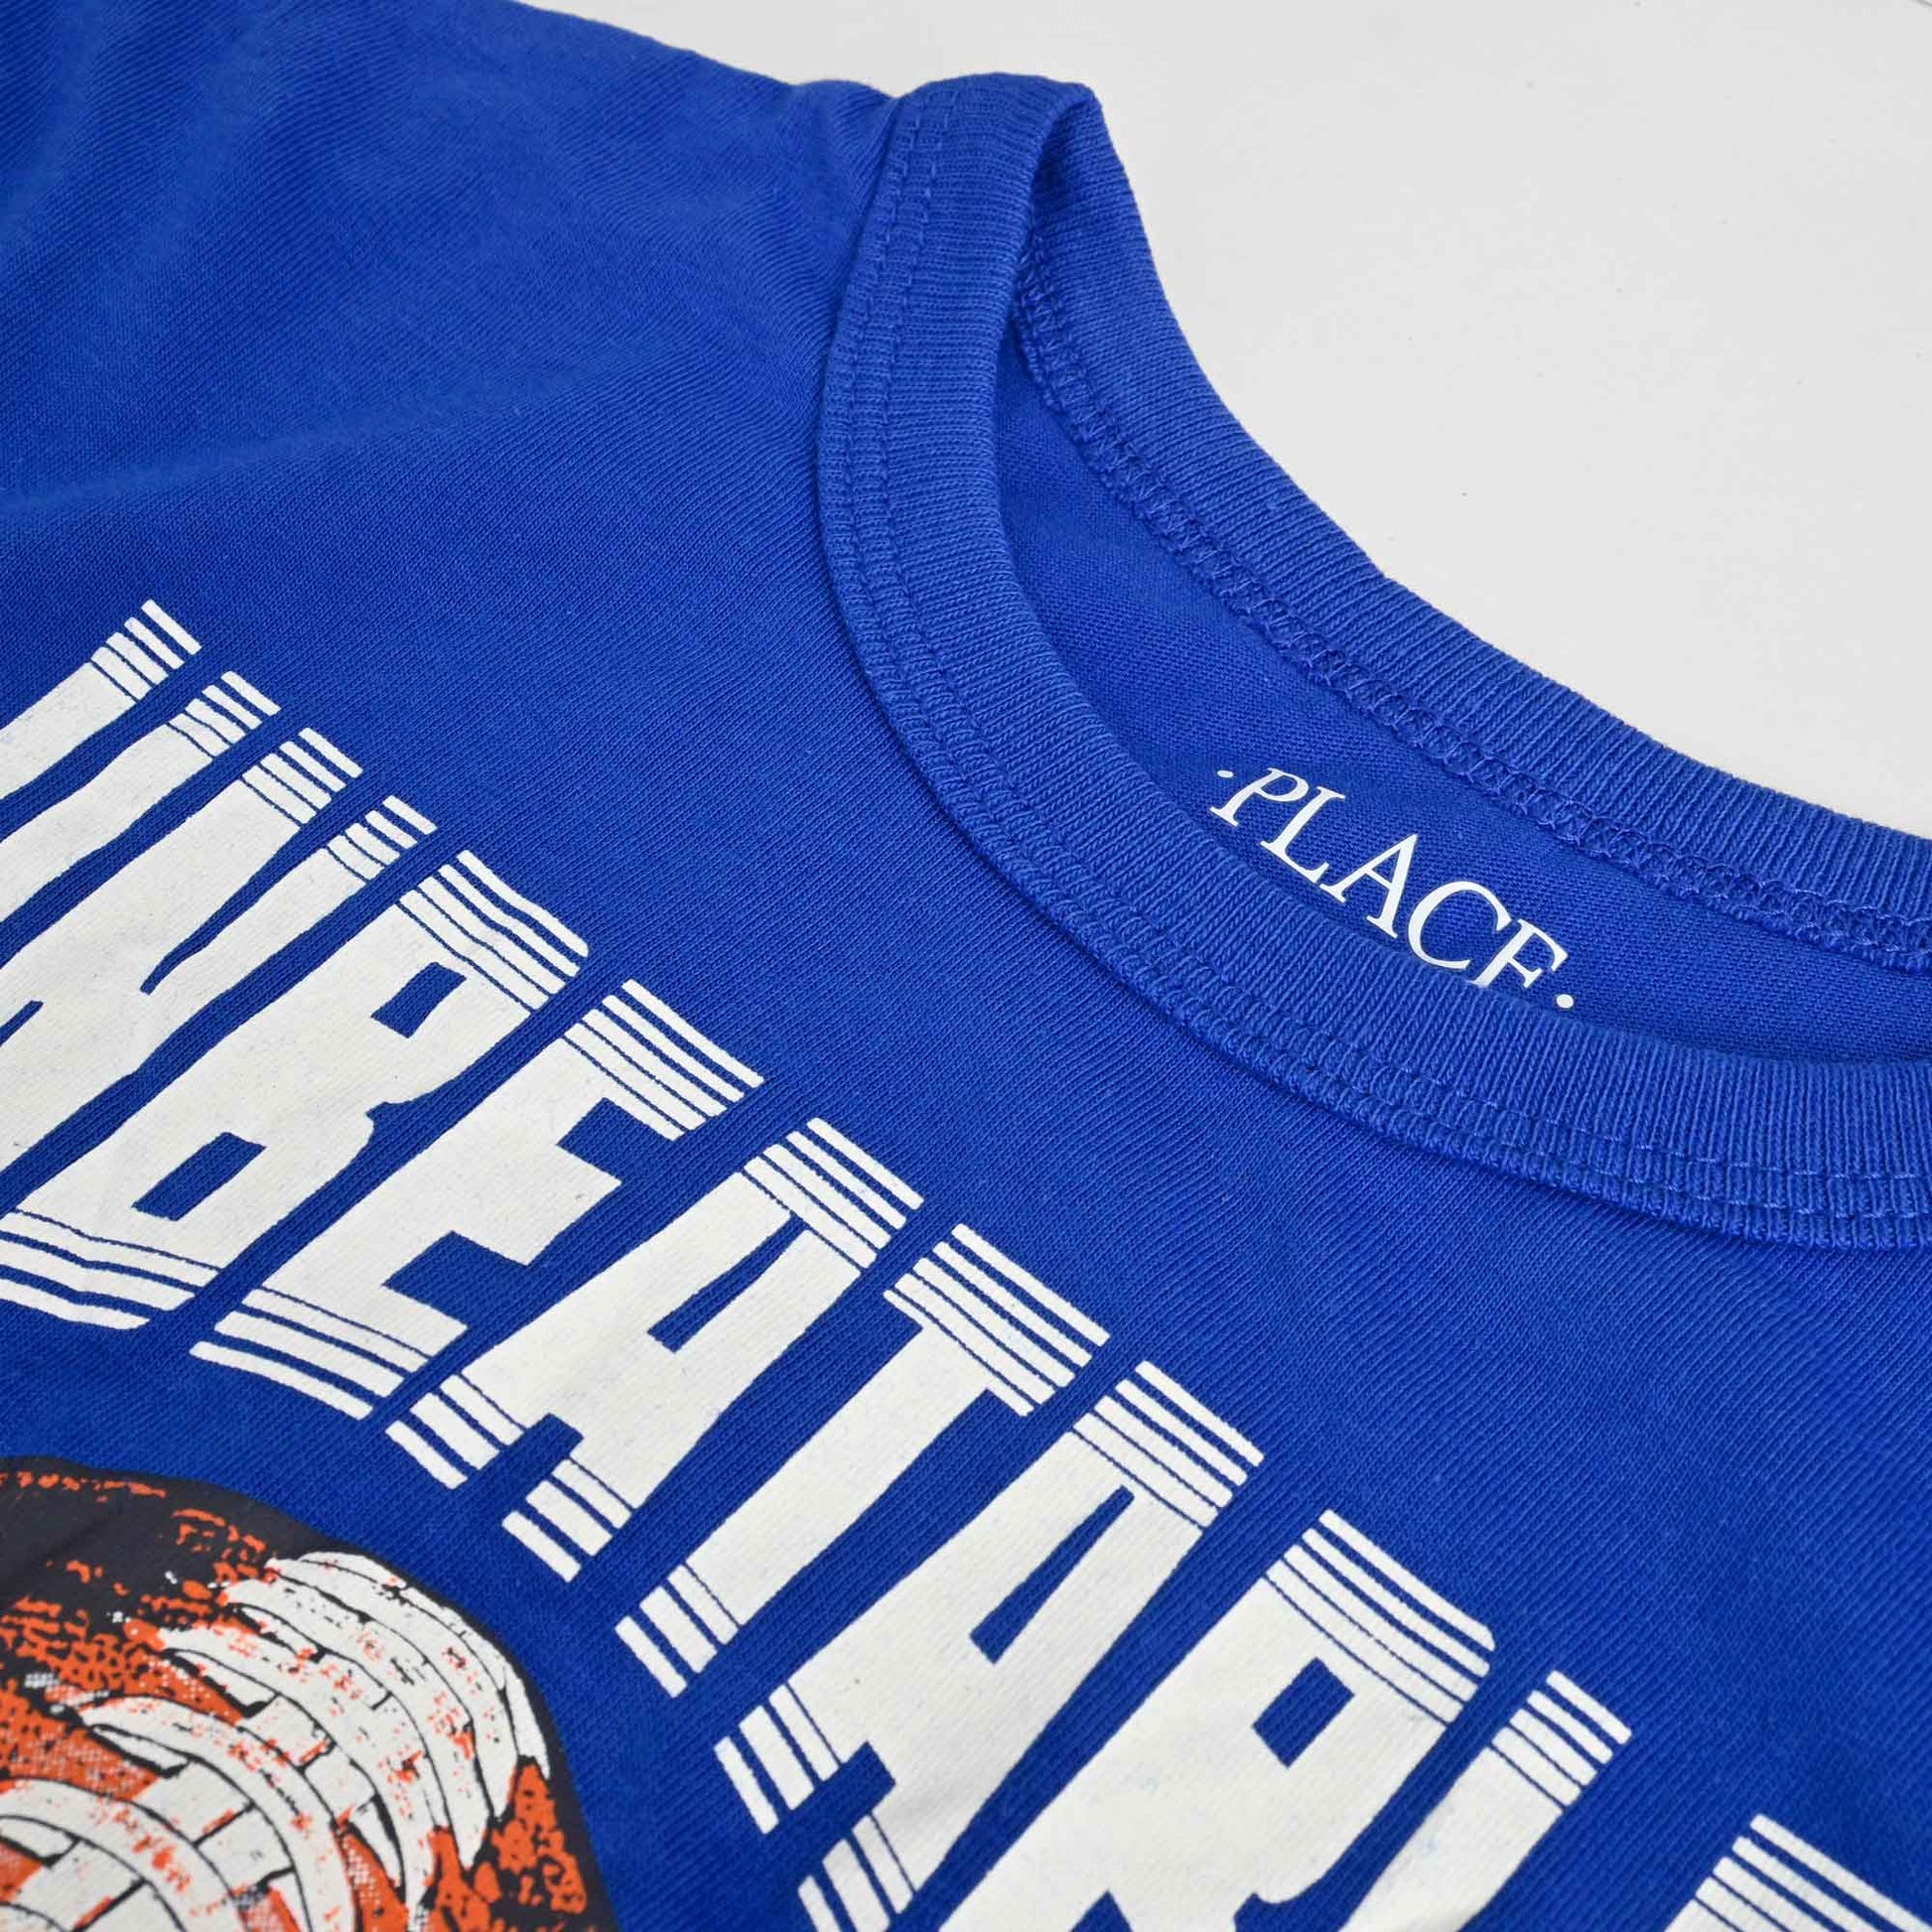 Place Kid's Unbeatable Printed Design Tee Shirt Girl's Tee Shirt SNC 